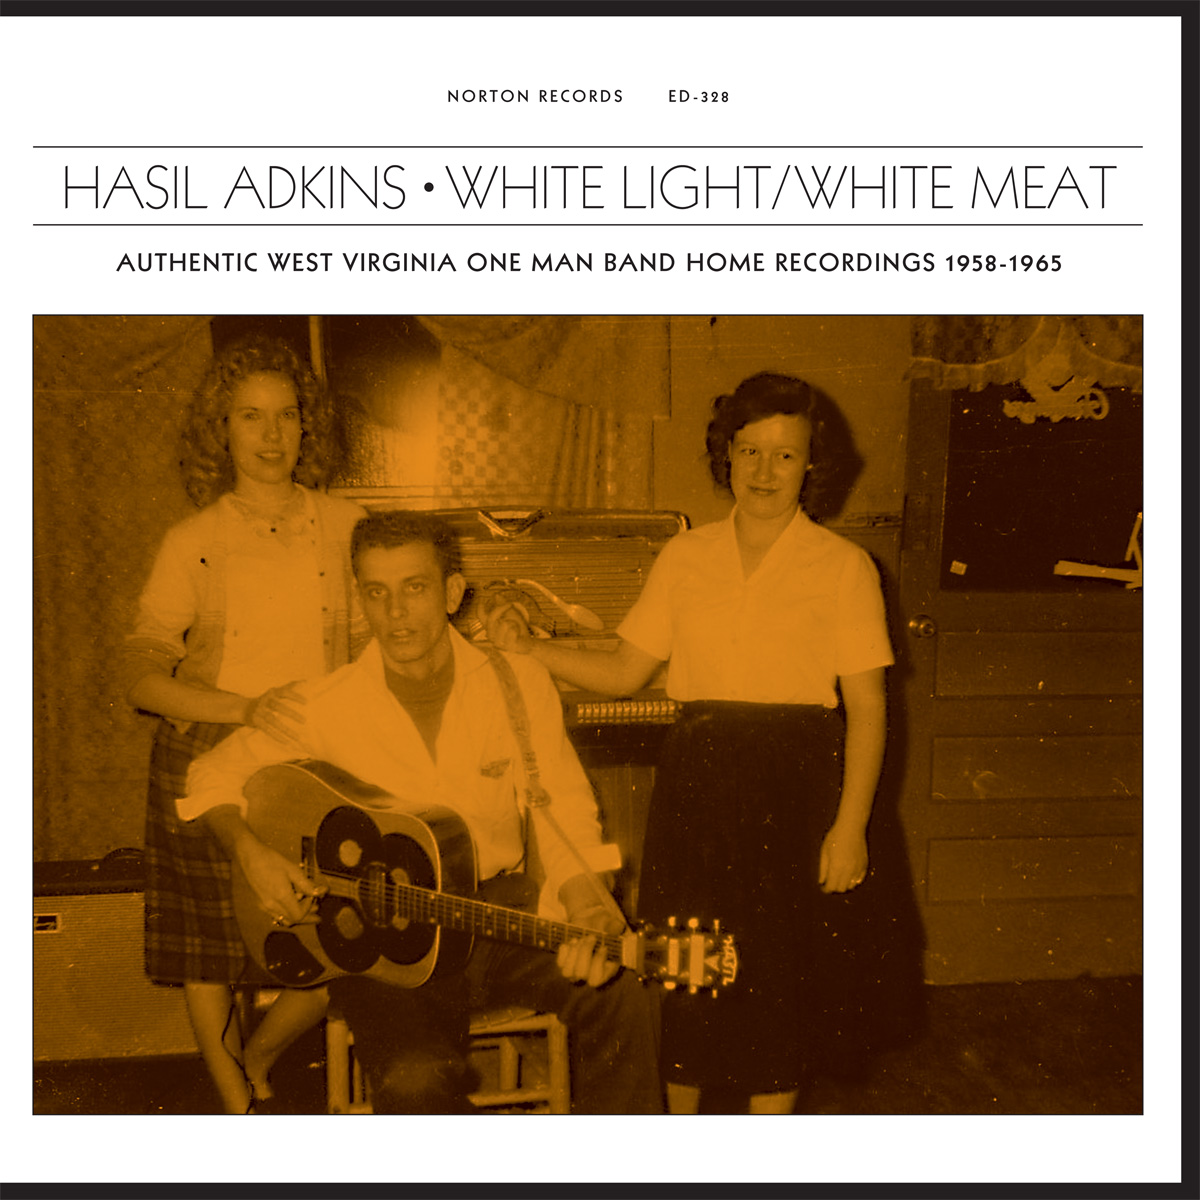 Hasil Adkins - White Light/White Meat LP cover